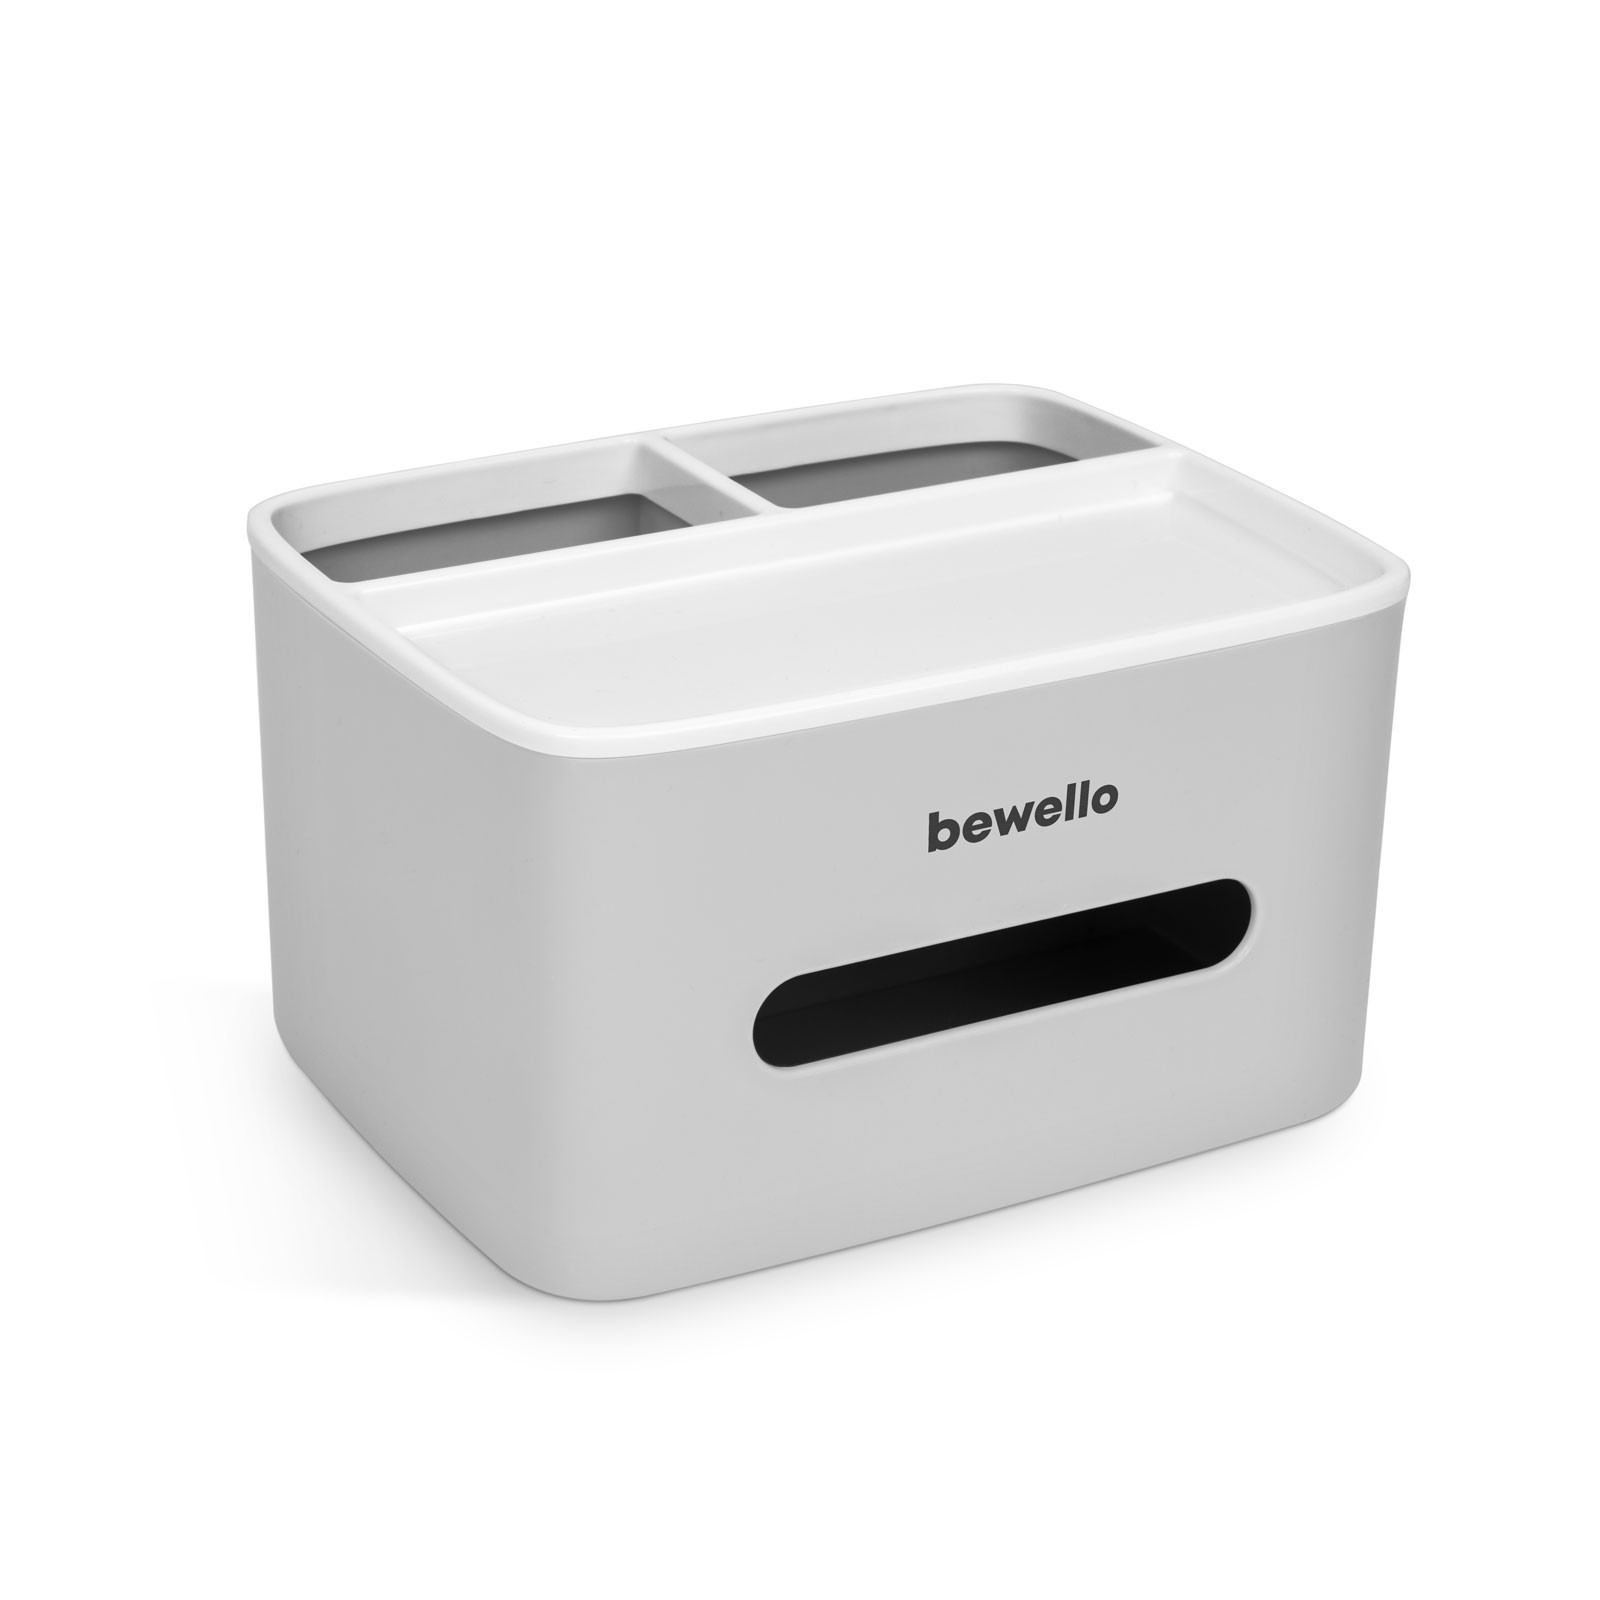 bewello - suport-dozator pentru batiste si servetele de hartie - alb - 205 x 160 x 120 mm